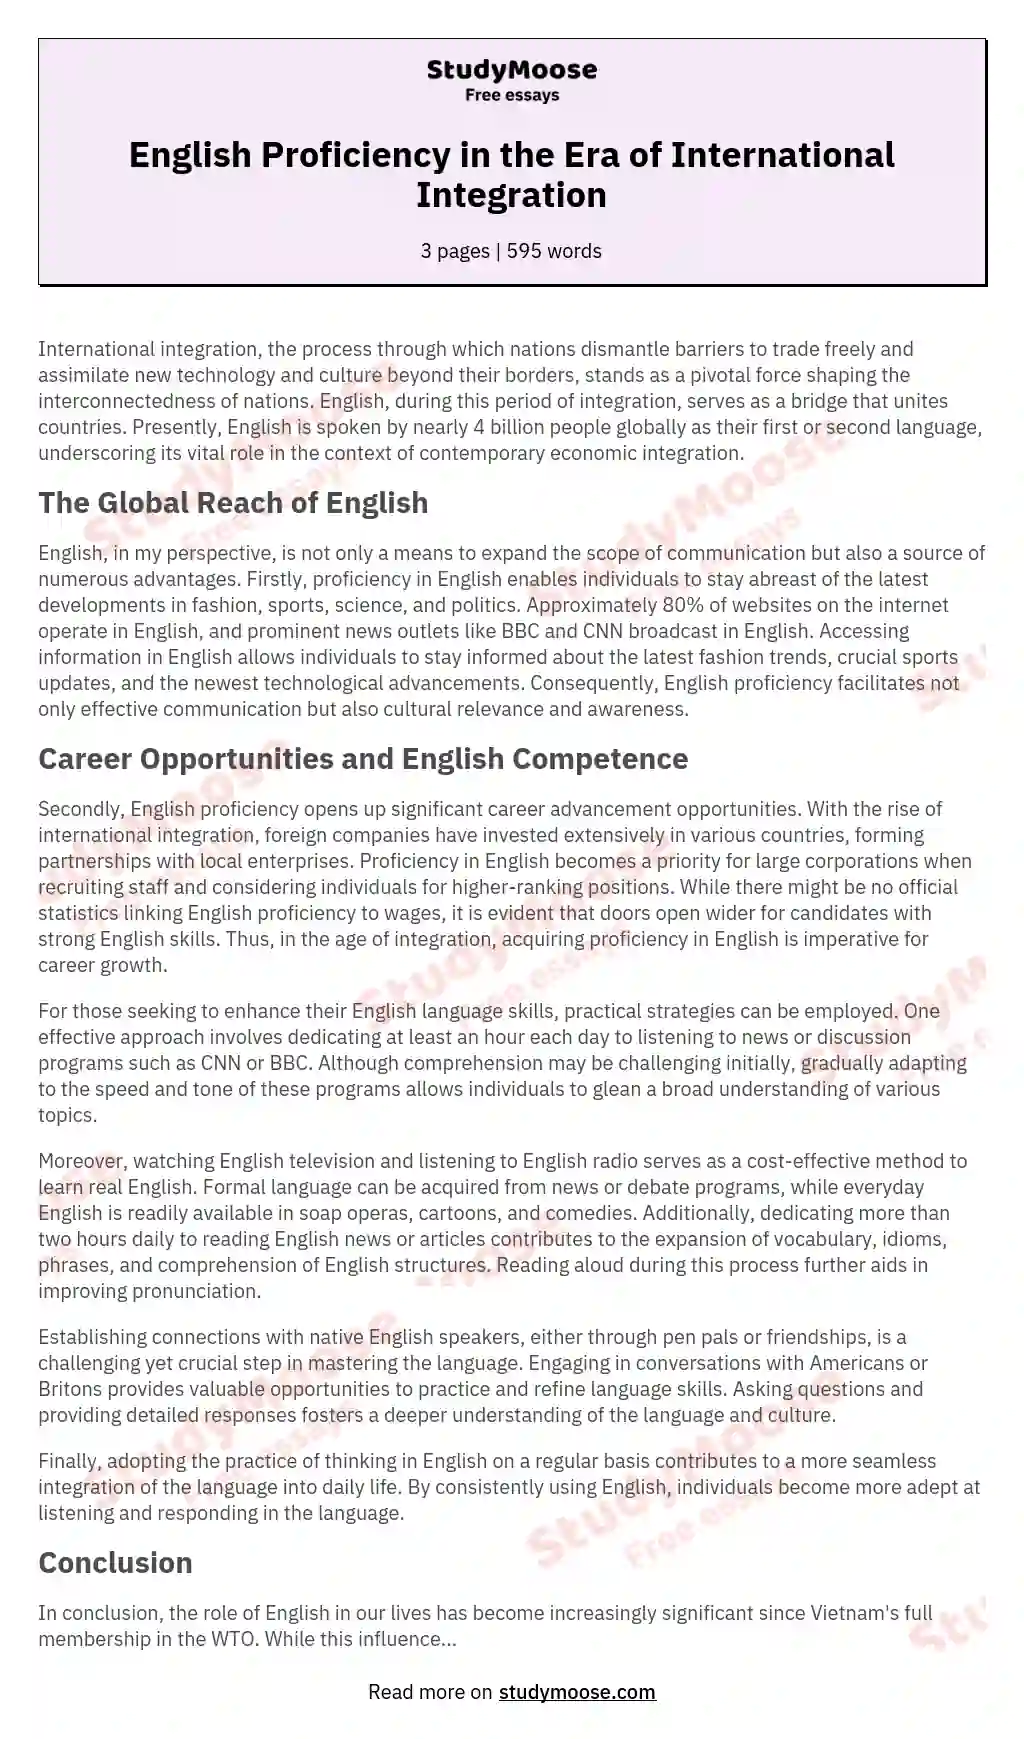 English Proficiency in the Era of International Integration essay